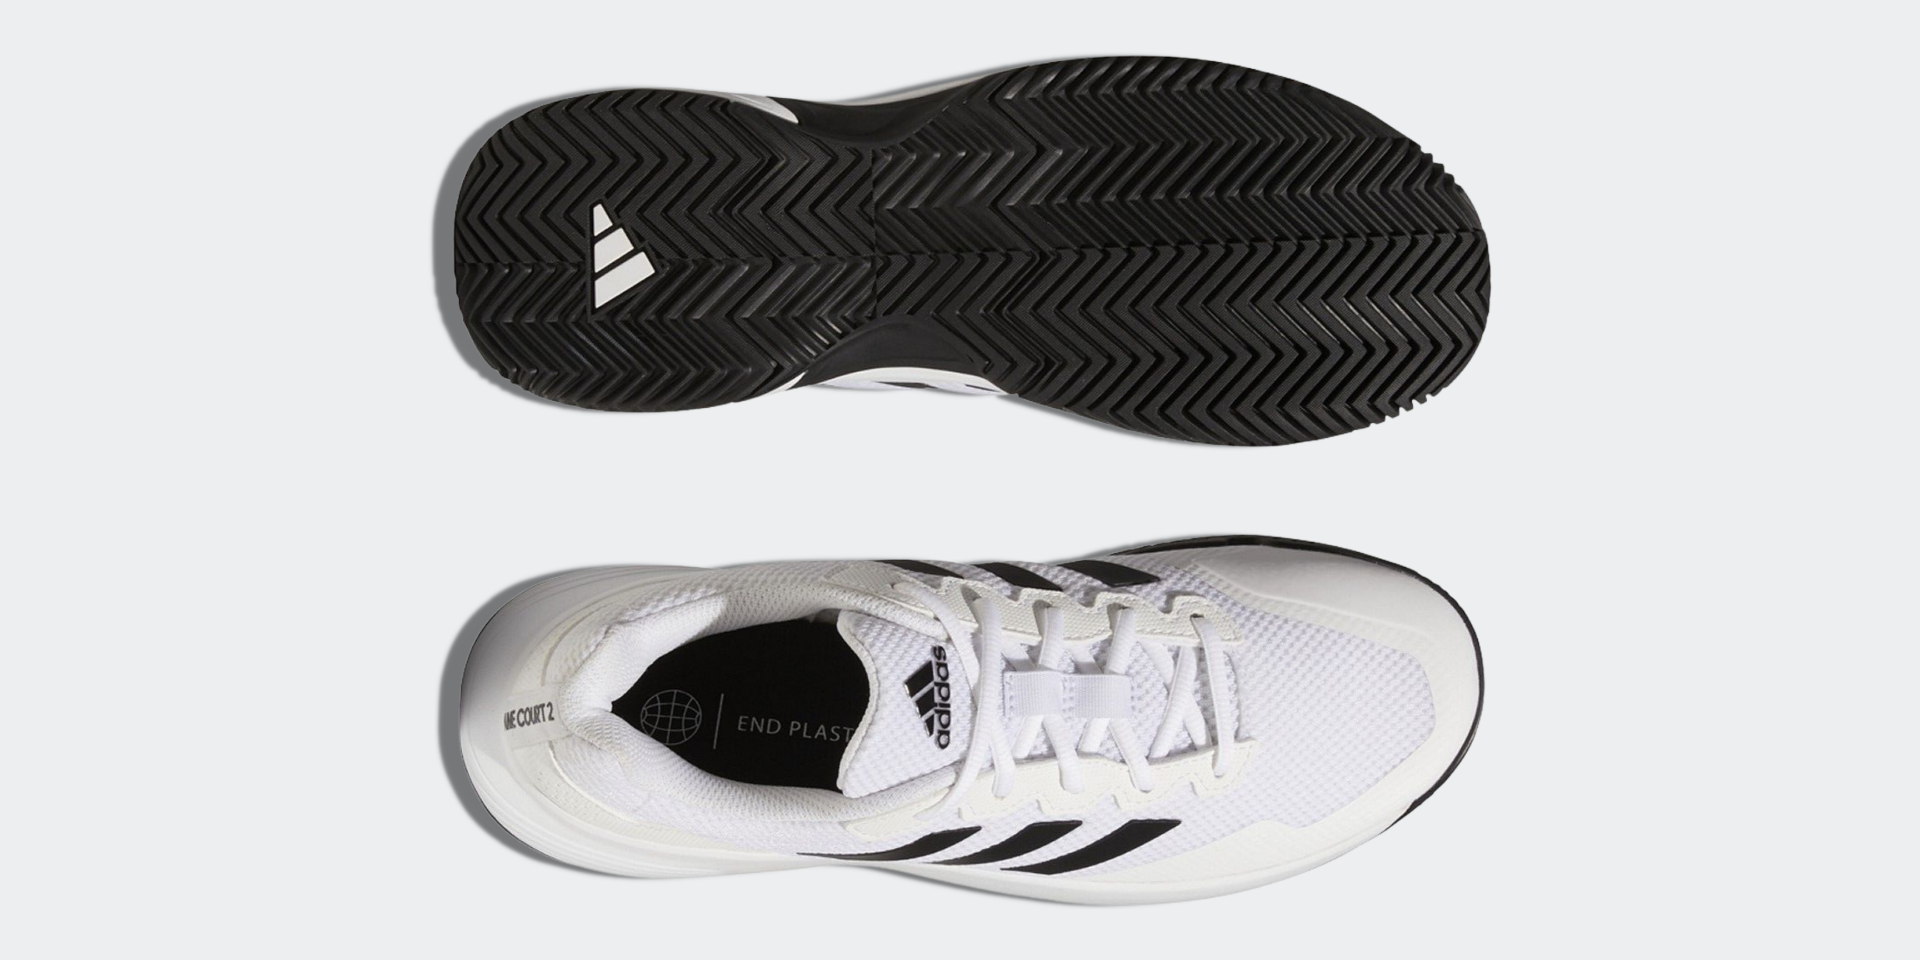 Adidas Gamecourt 2 Tennis Shoe Review | RevUp Sports